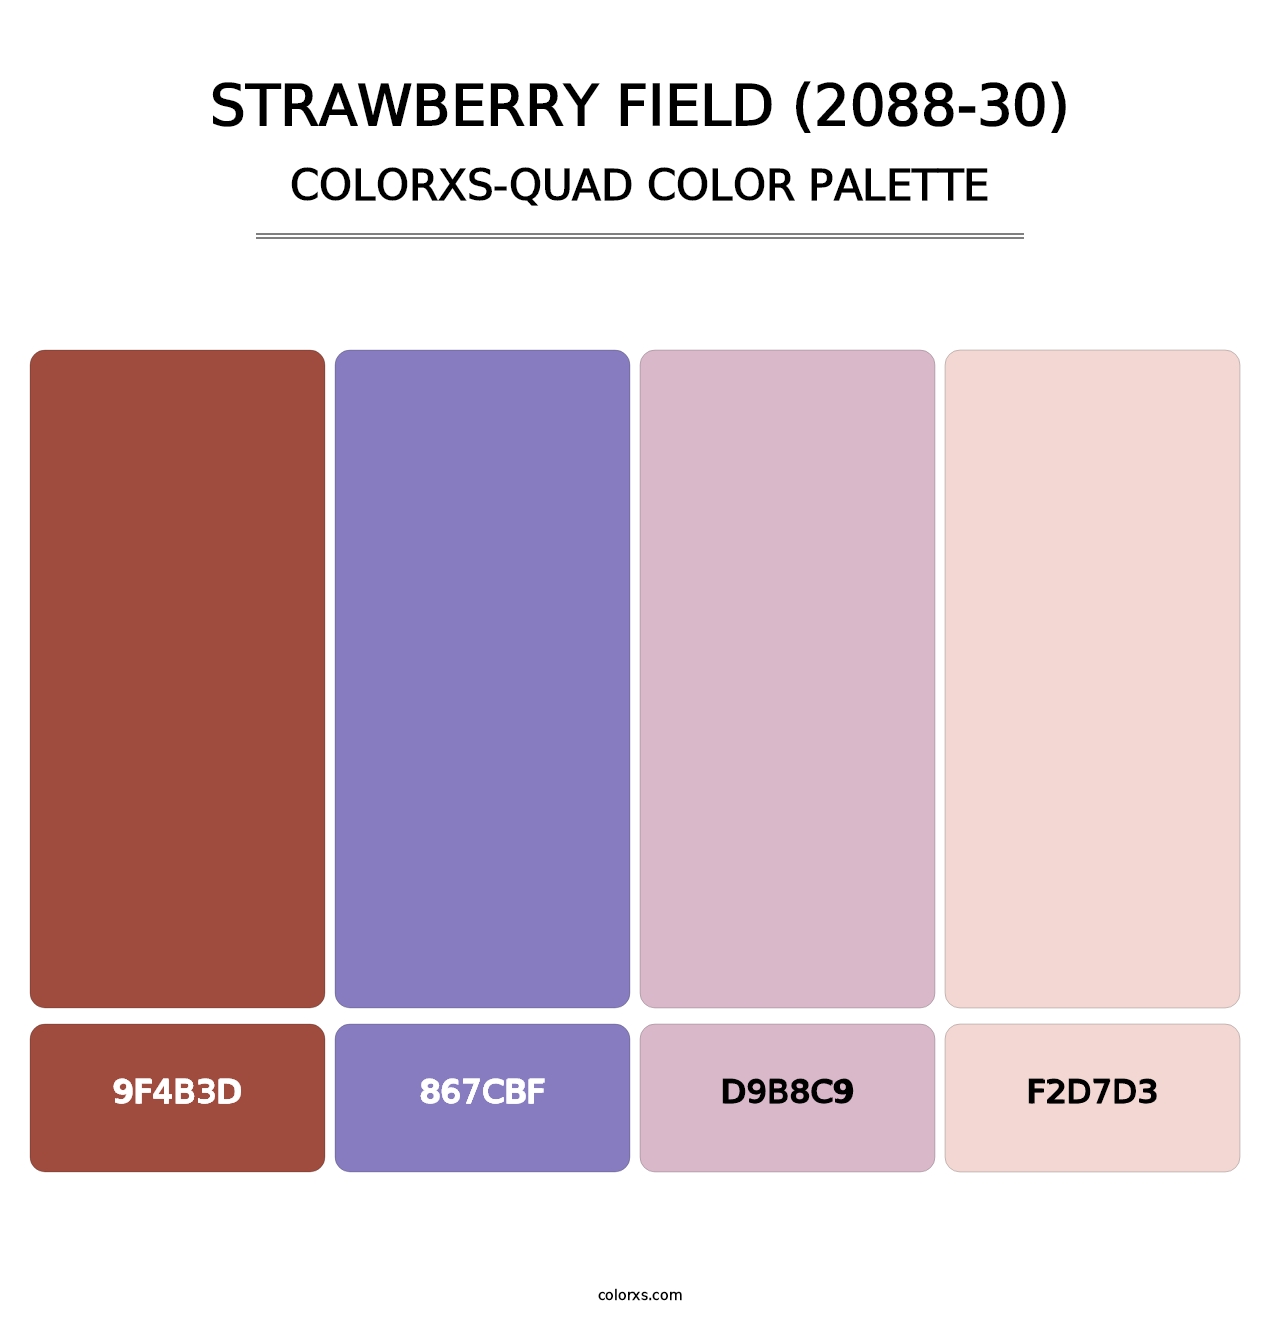 Strawberry Field (2088-30) - Colorxs Quad Palette